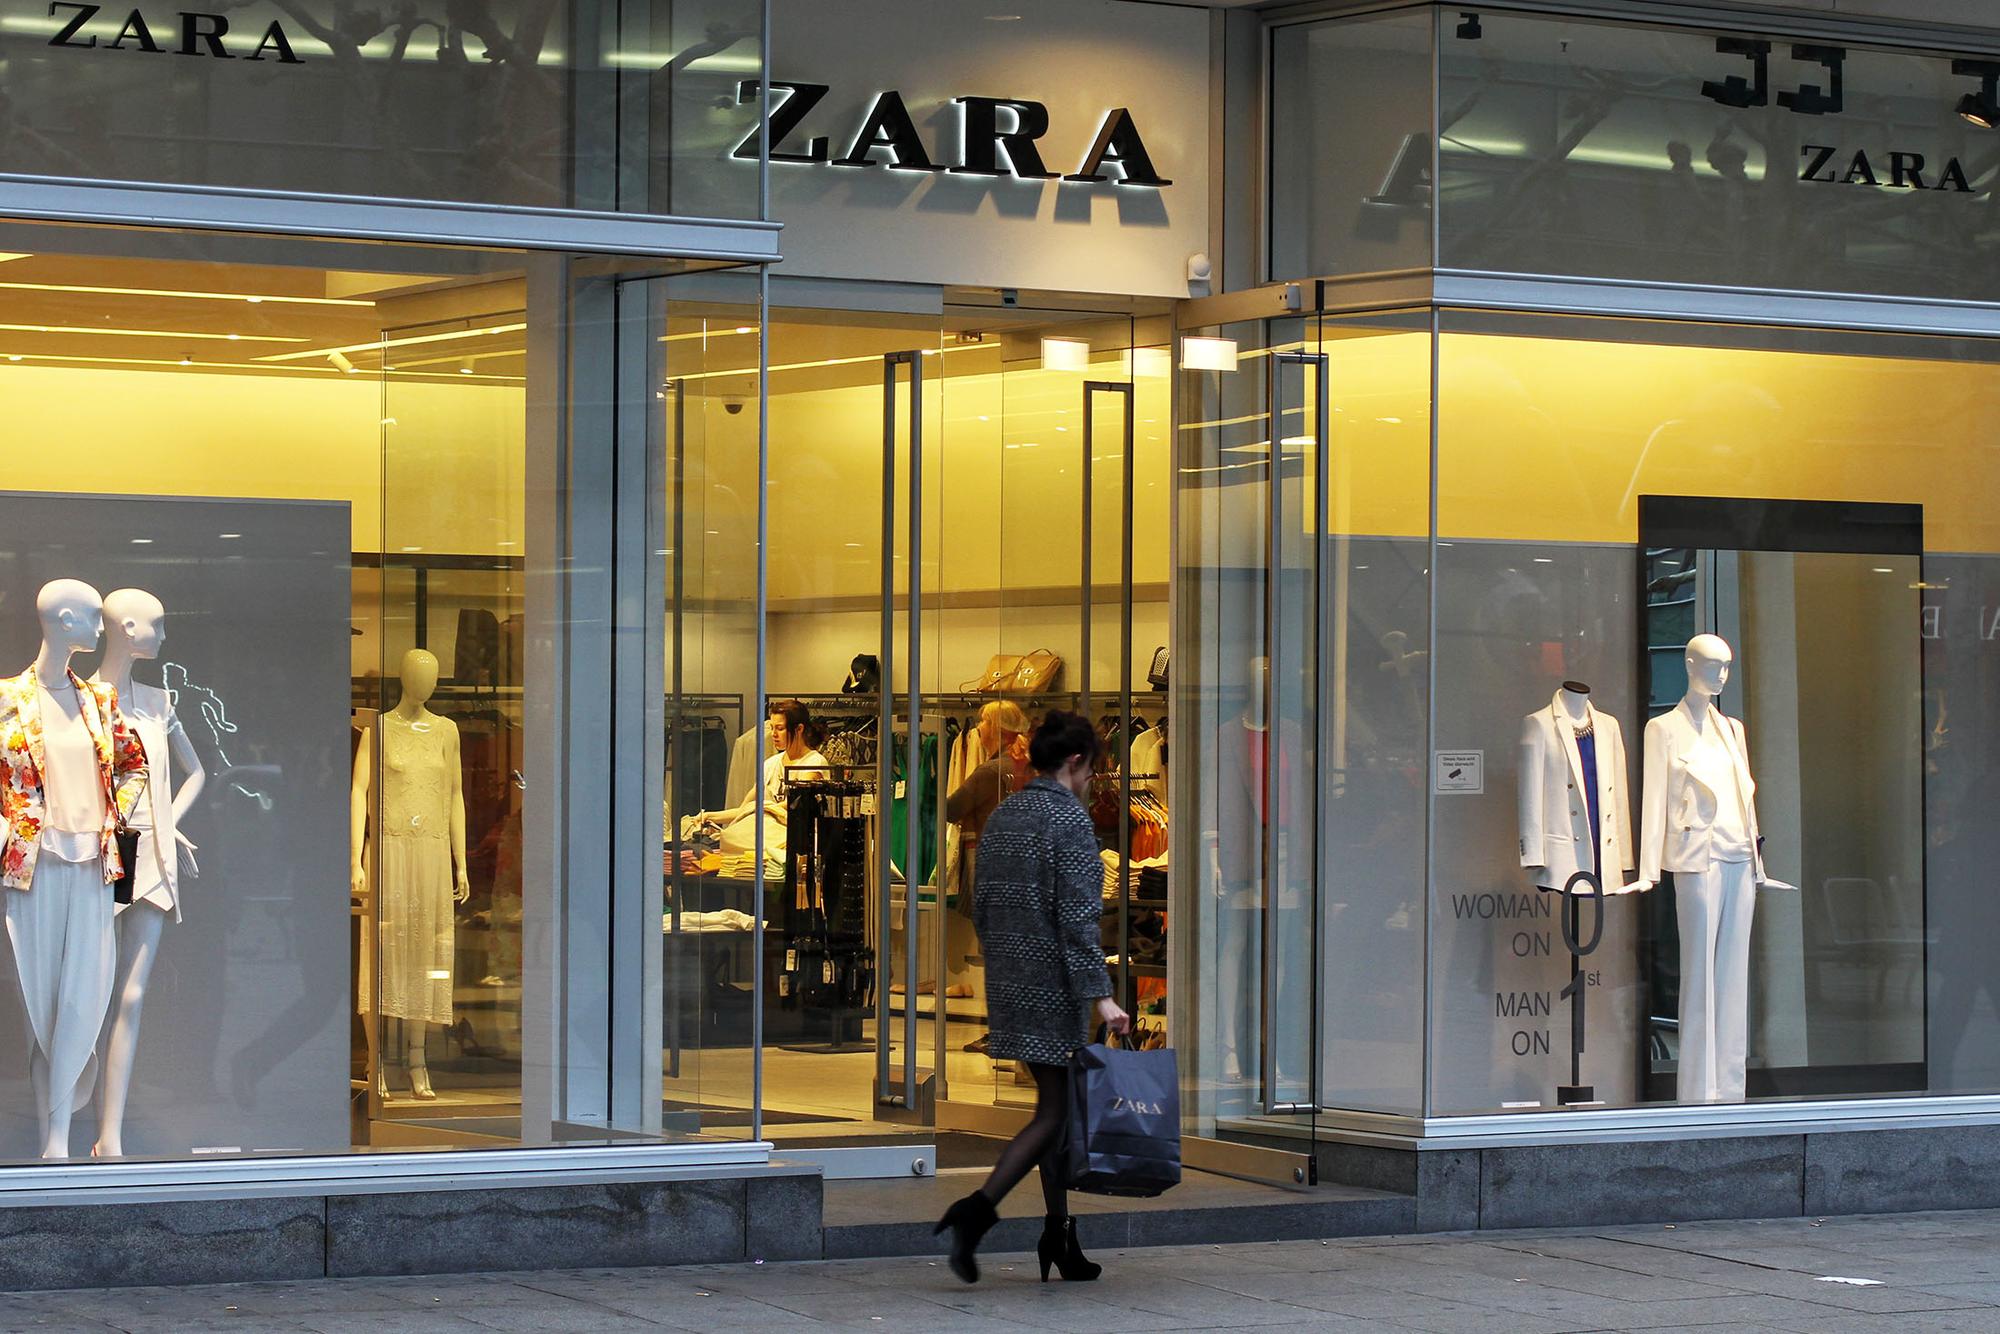 Tienda Zara